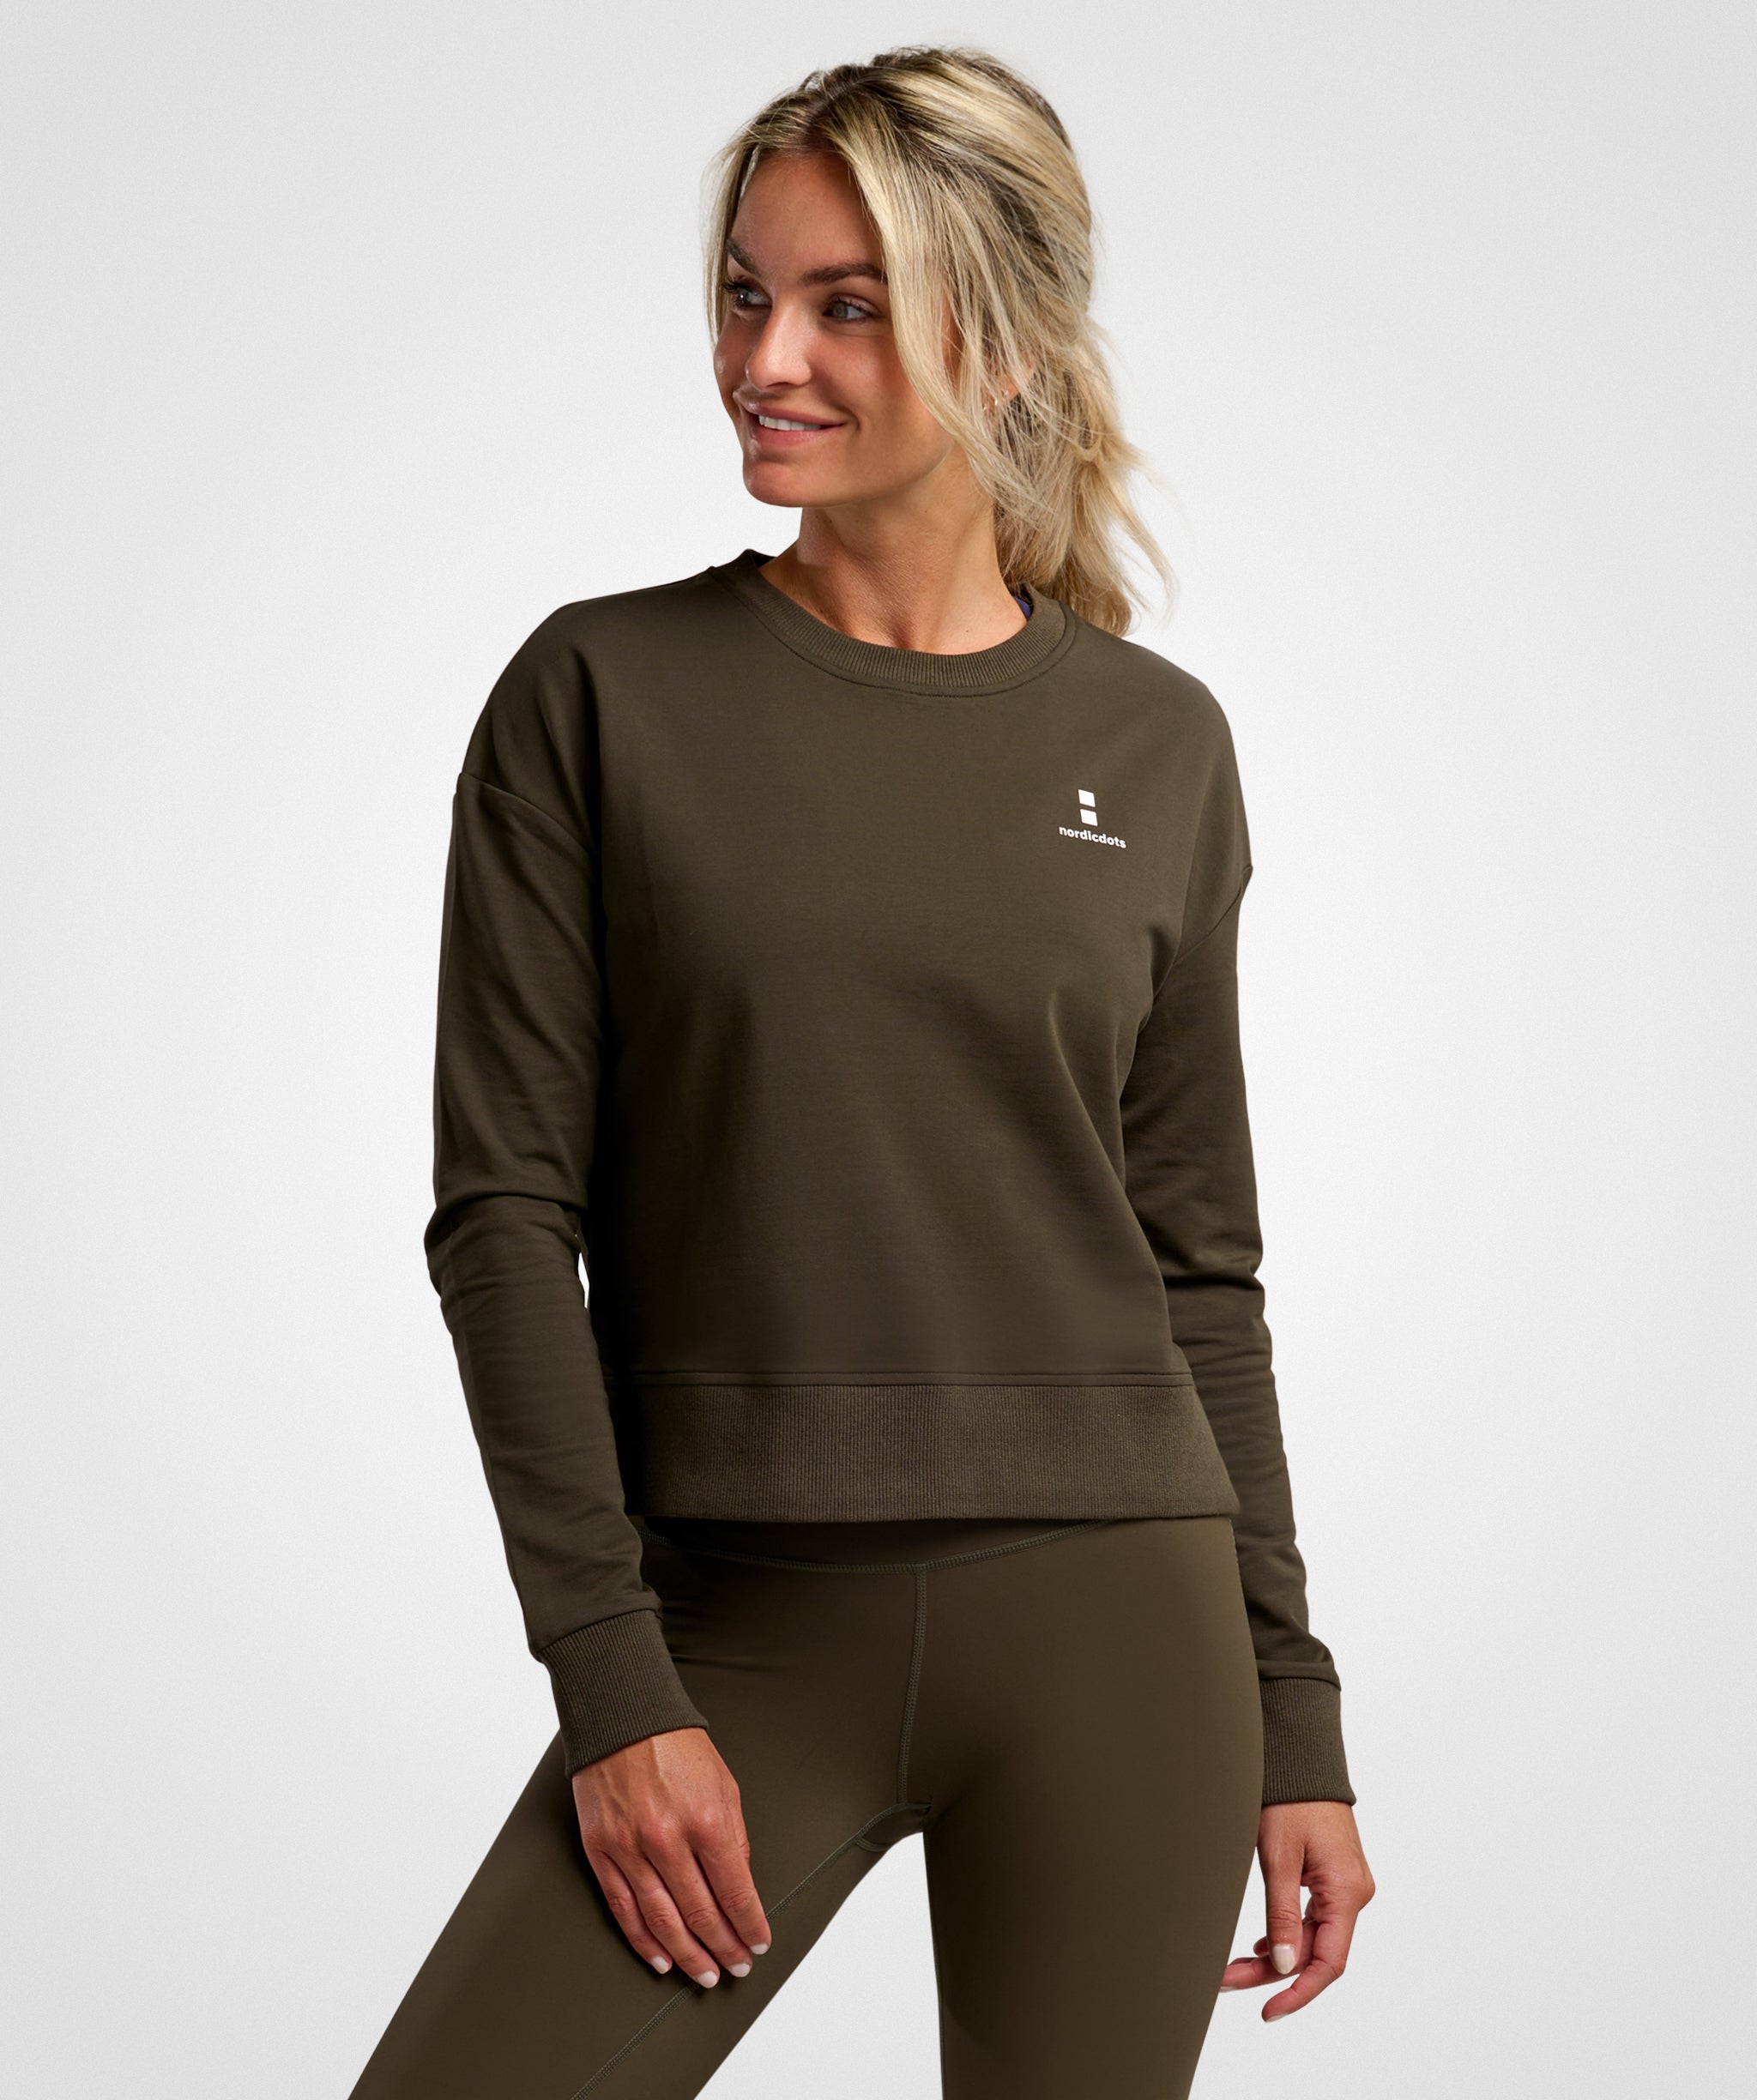 nordicdots sweatshirt hoodie olive green color nordicdots.com tennis padel golf